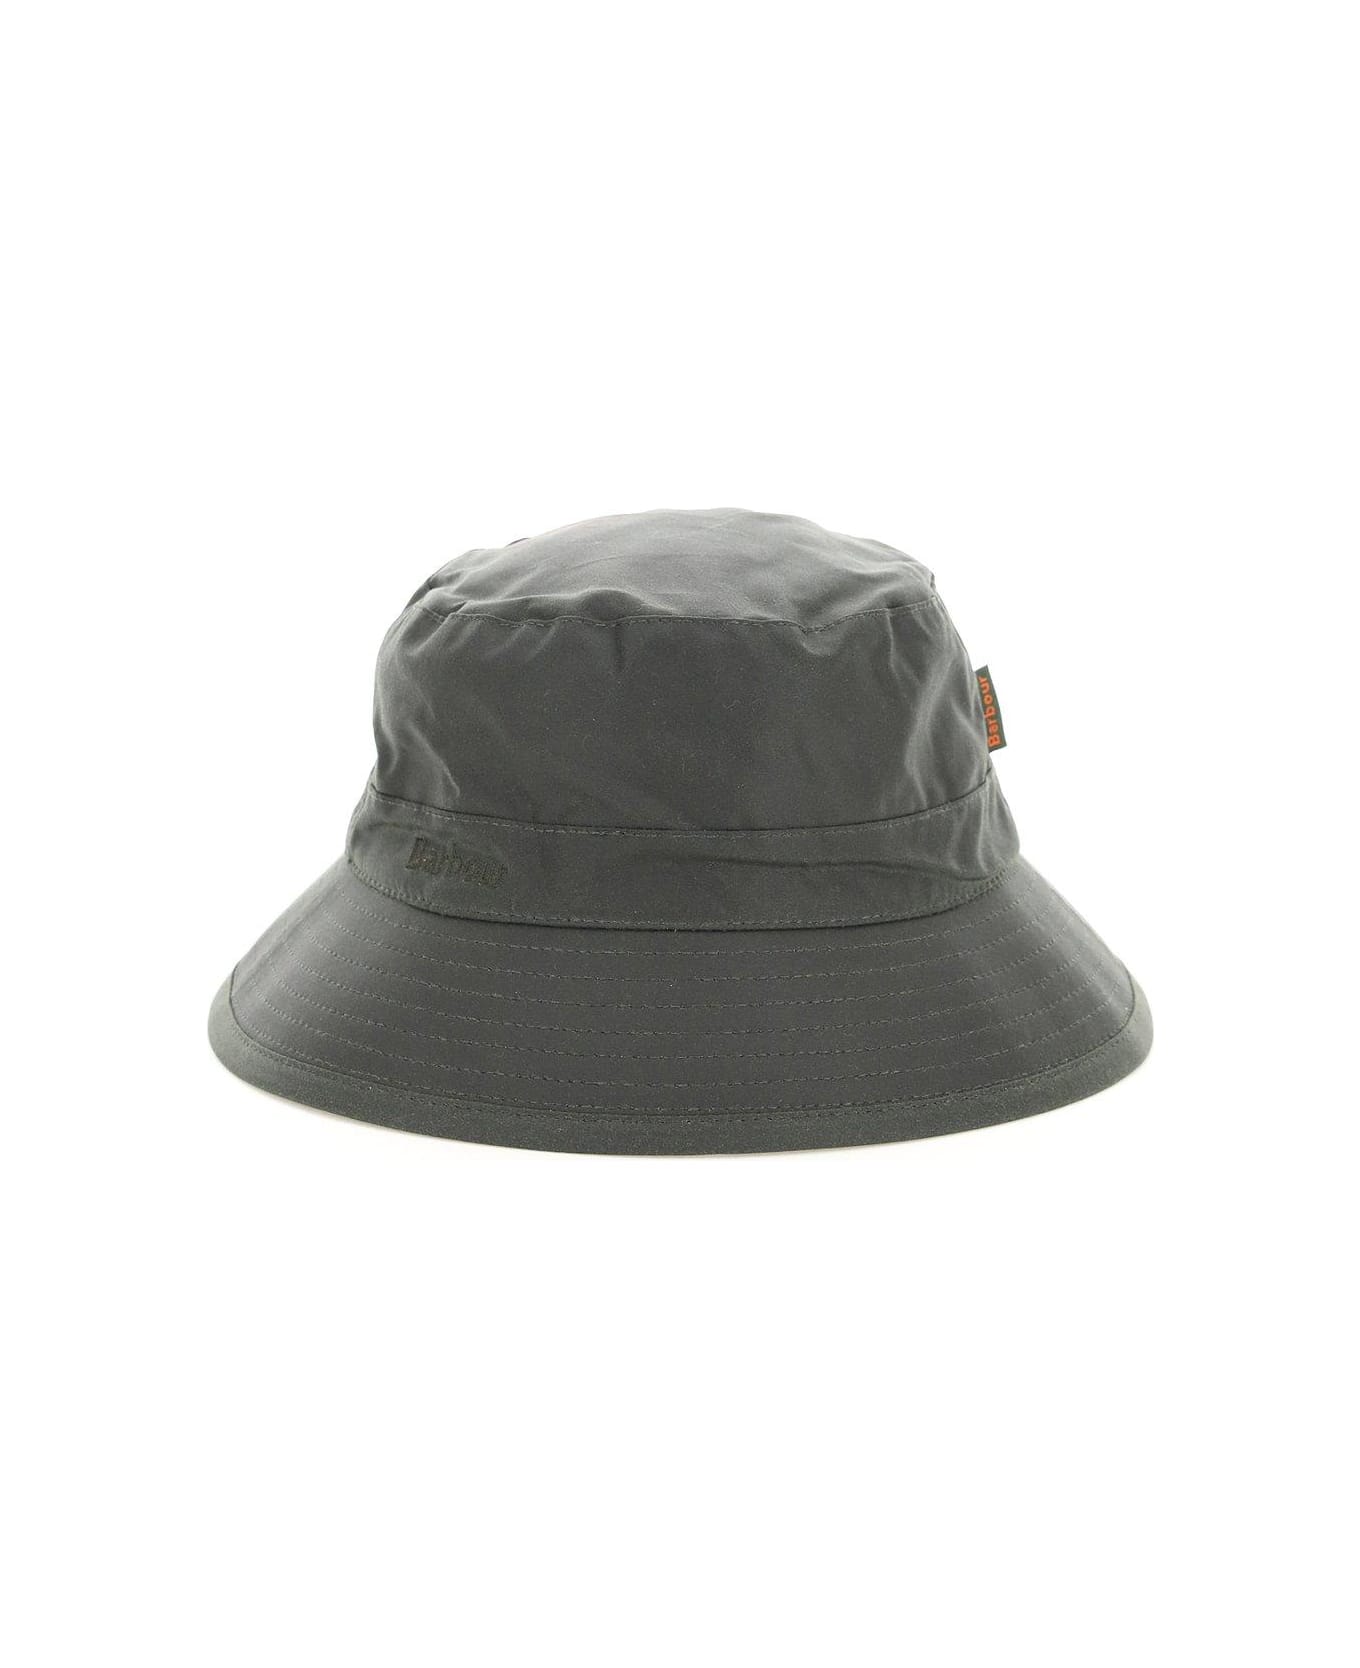 Barbour Waxed Bucket Hat - Sage